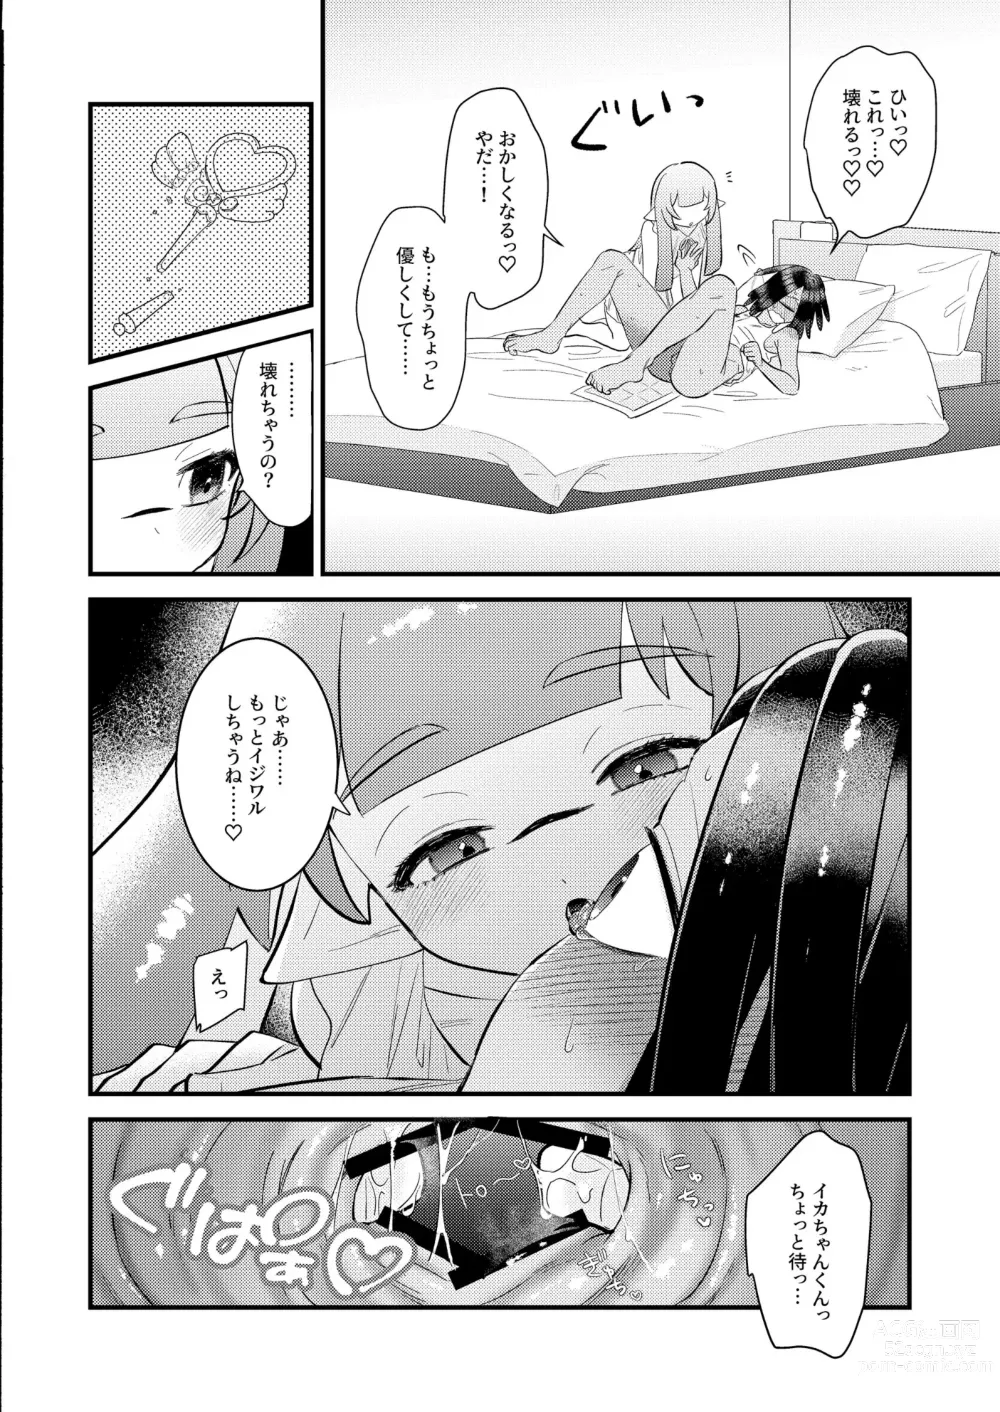 Page 29 of doujinshi Uketomete Hoshii no My Darling! - I want you to accept me my darling!